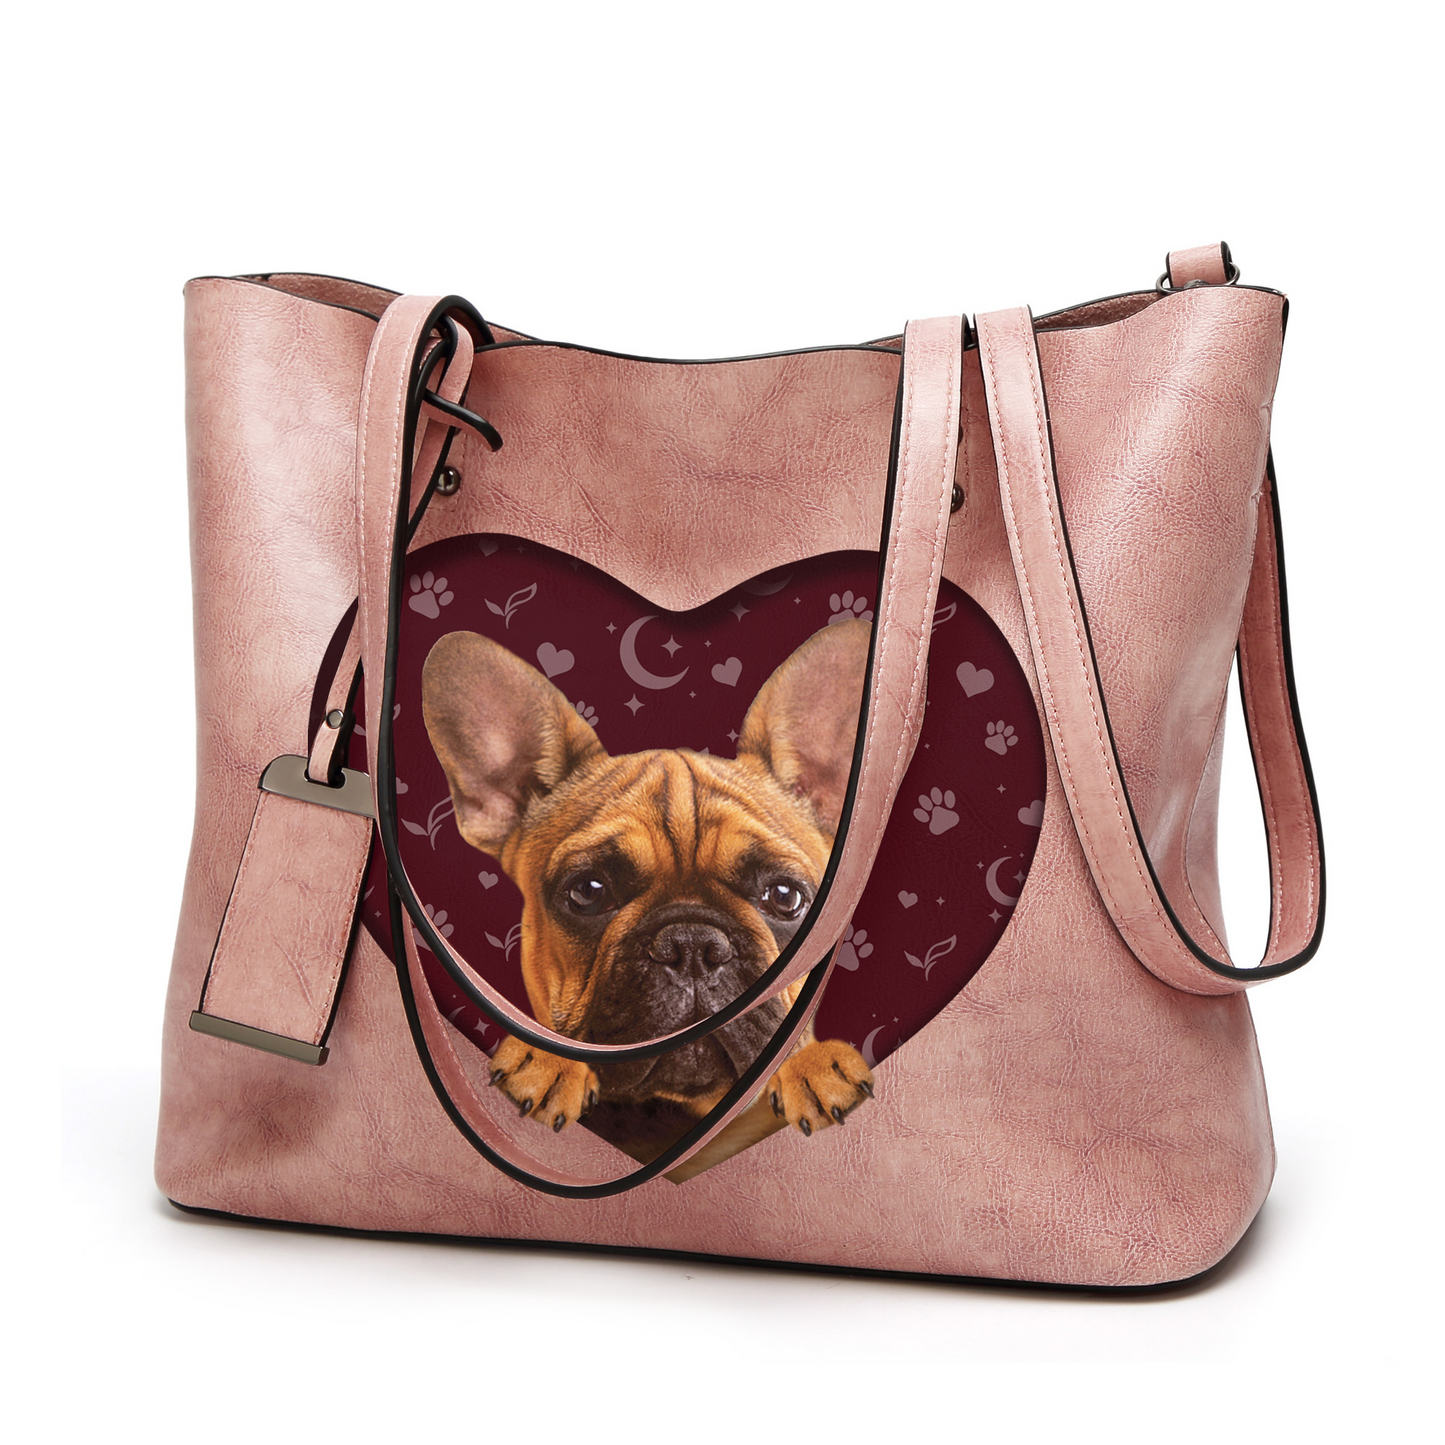 I Know I'm Cute - French Bulldog Glamour Handbag V1 - 8